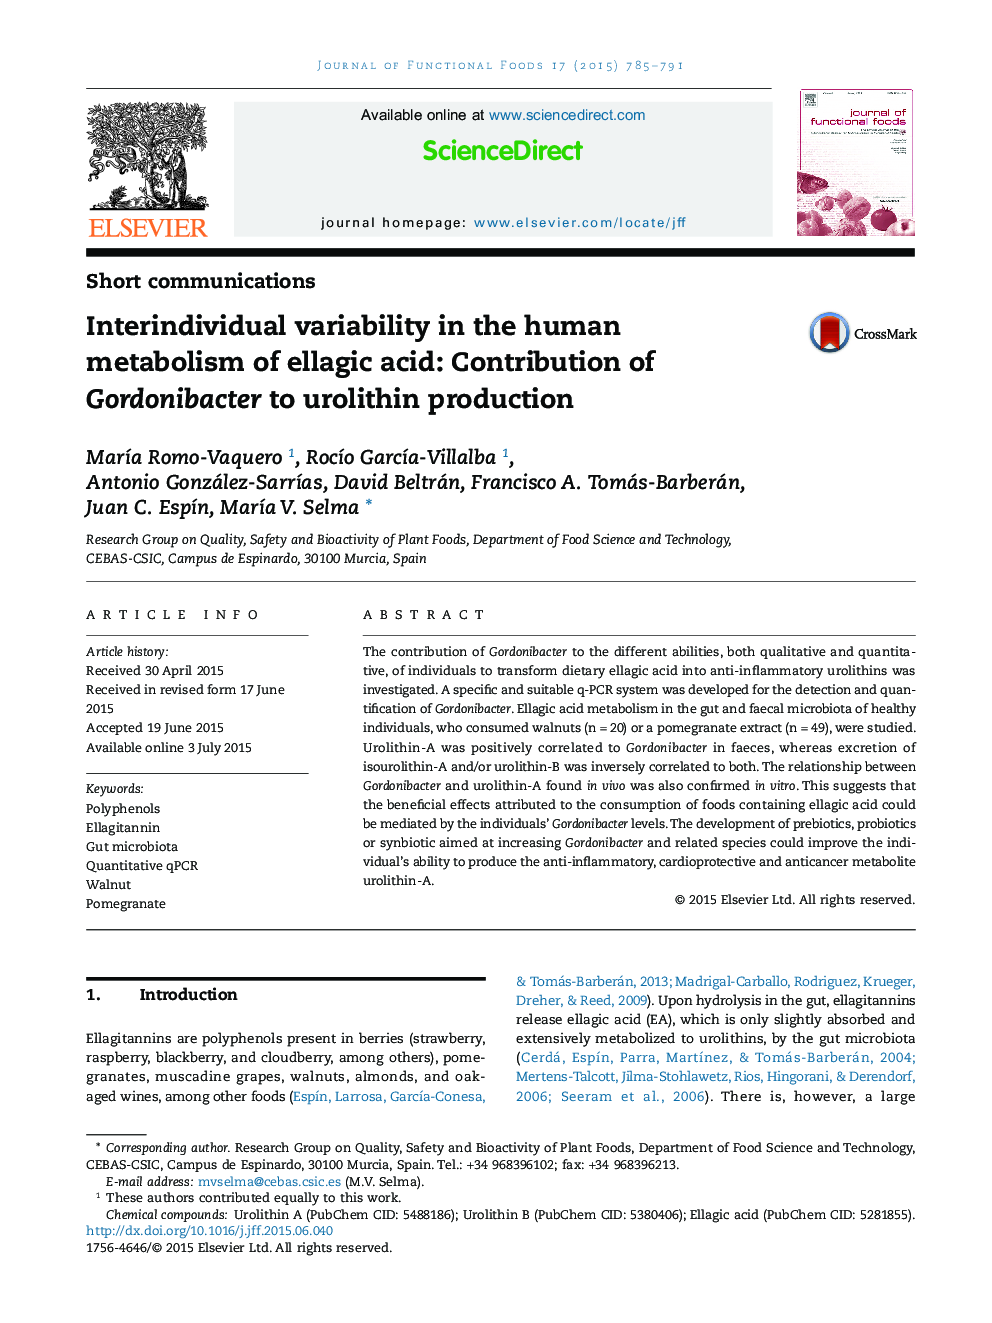 Interindividual variability in the human metabolism of ellagic acid: Contribution of Gordonibacter to urolithin production